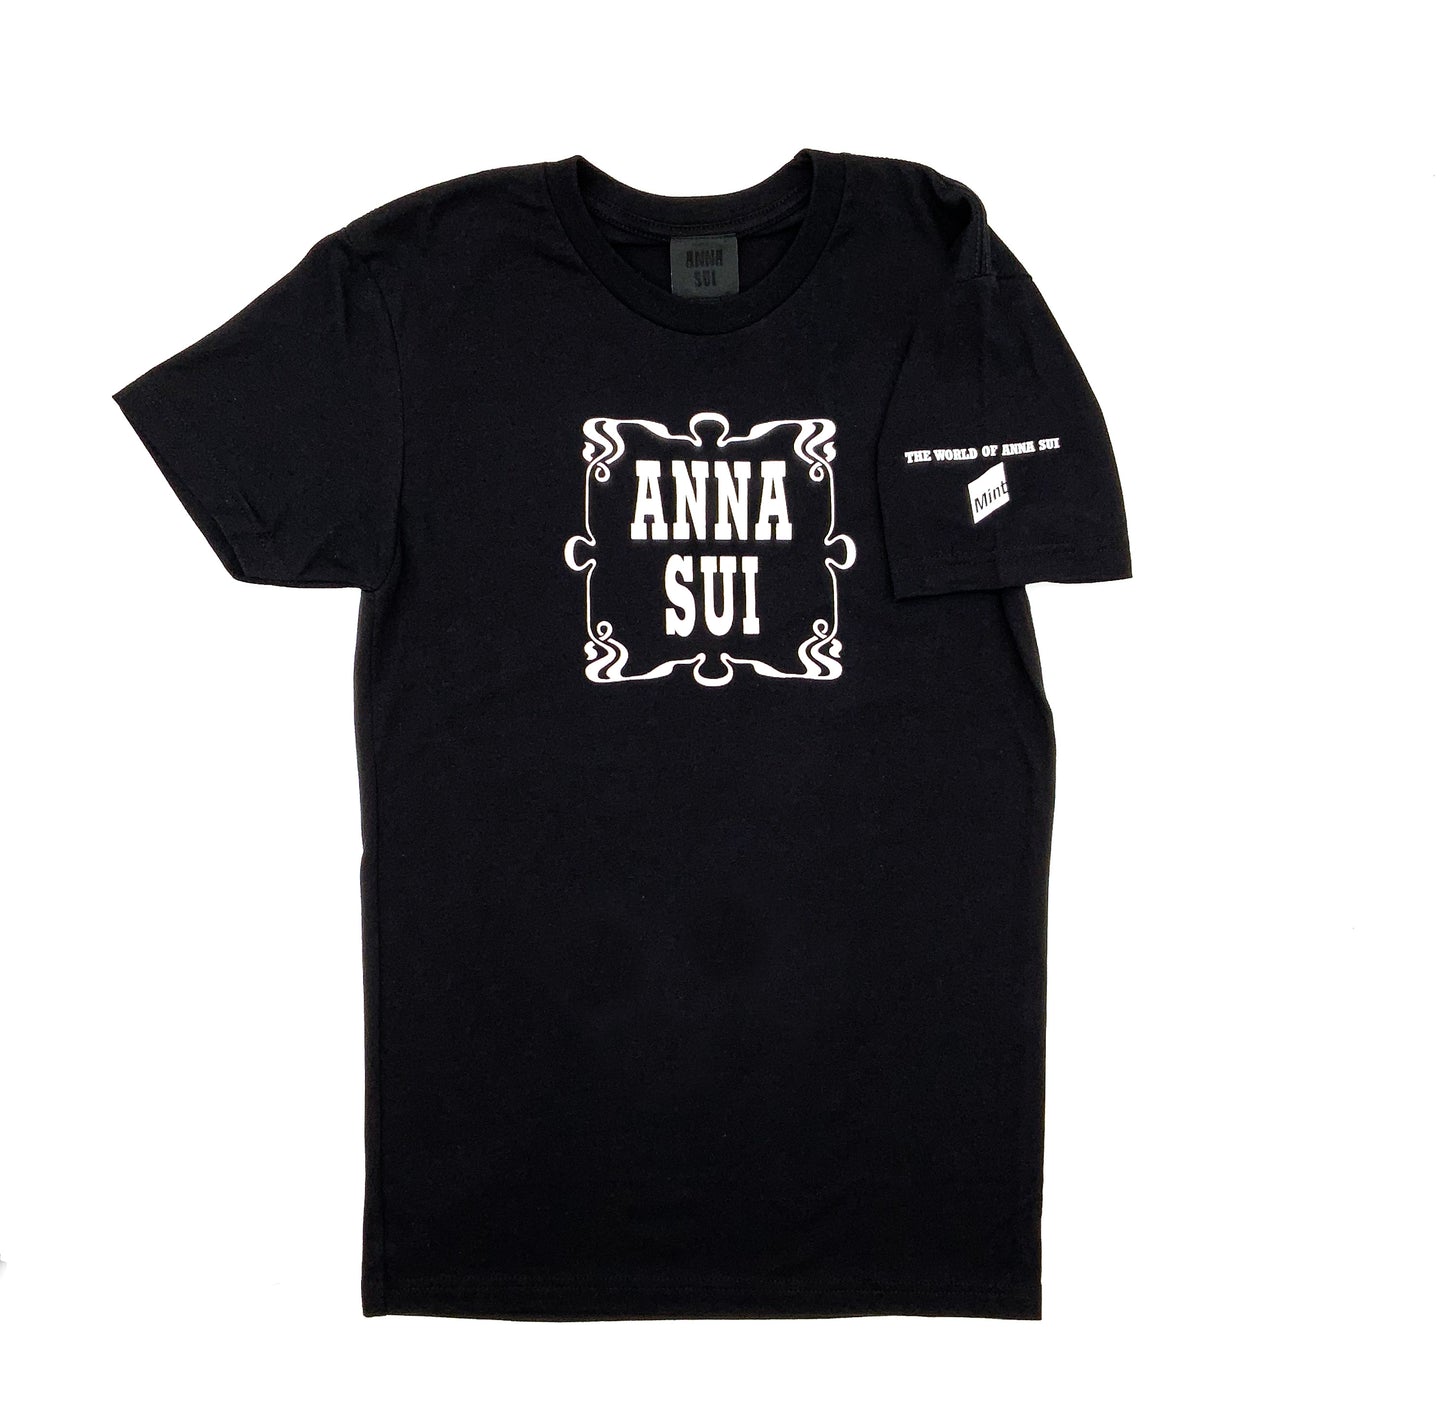 Anna Sui Black T-Shirt Lg